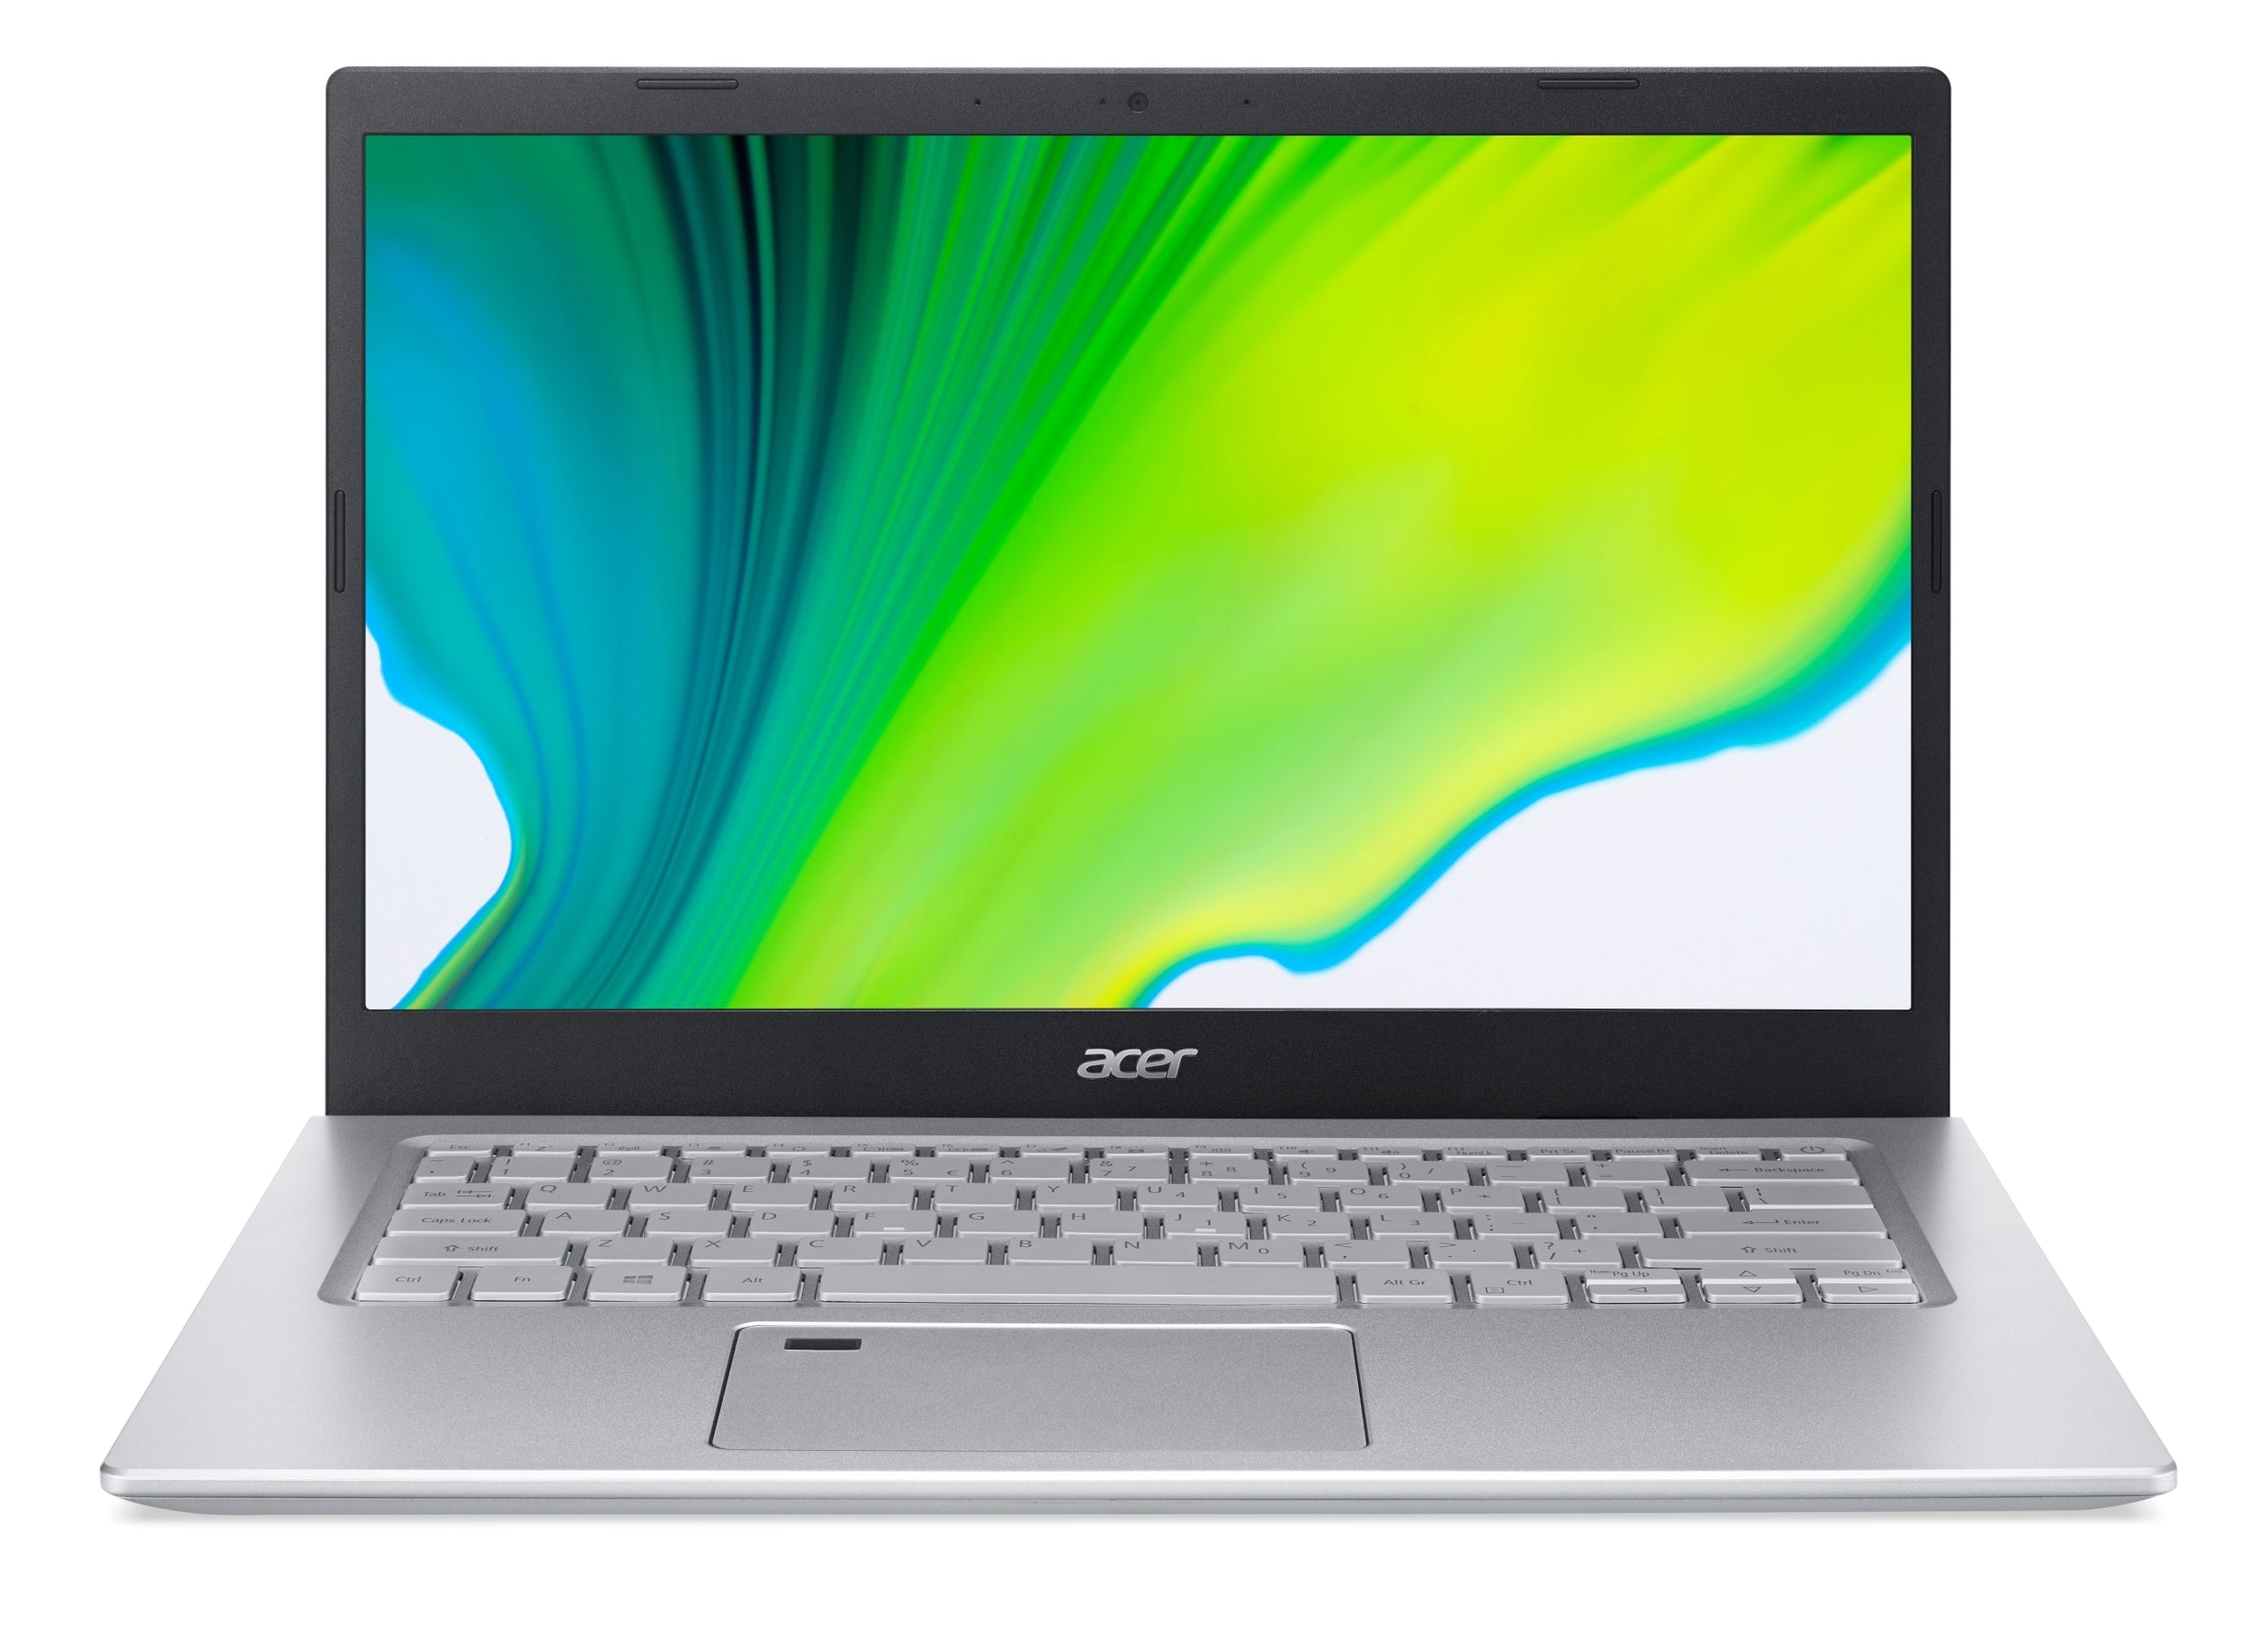 Computadora Portátil Acer A514-54-55Fq Laptop Aspire Pulgadas Full Hd Intel Core I5-1135G7 Ram 8Gb Ssd 512Gb W10 Home Año De Garantia En Centro Servicio Y Seguro Contr